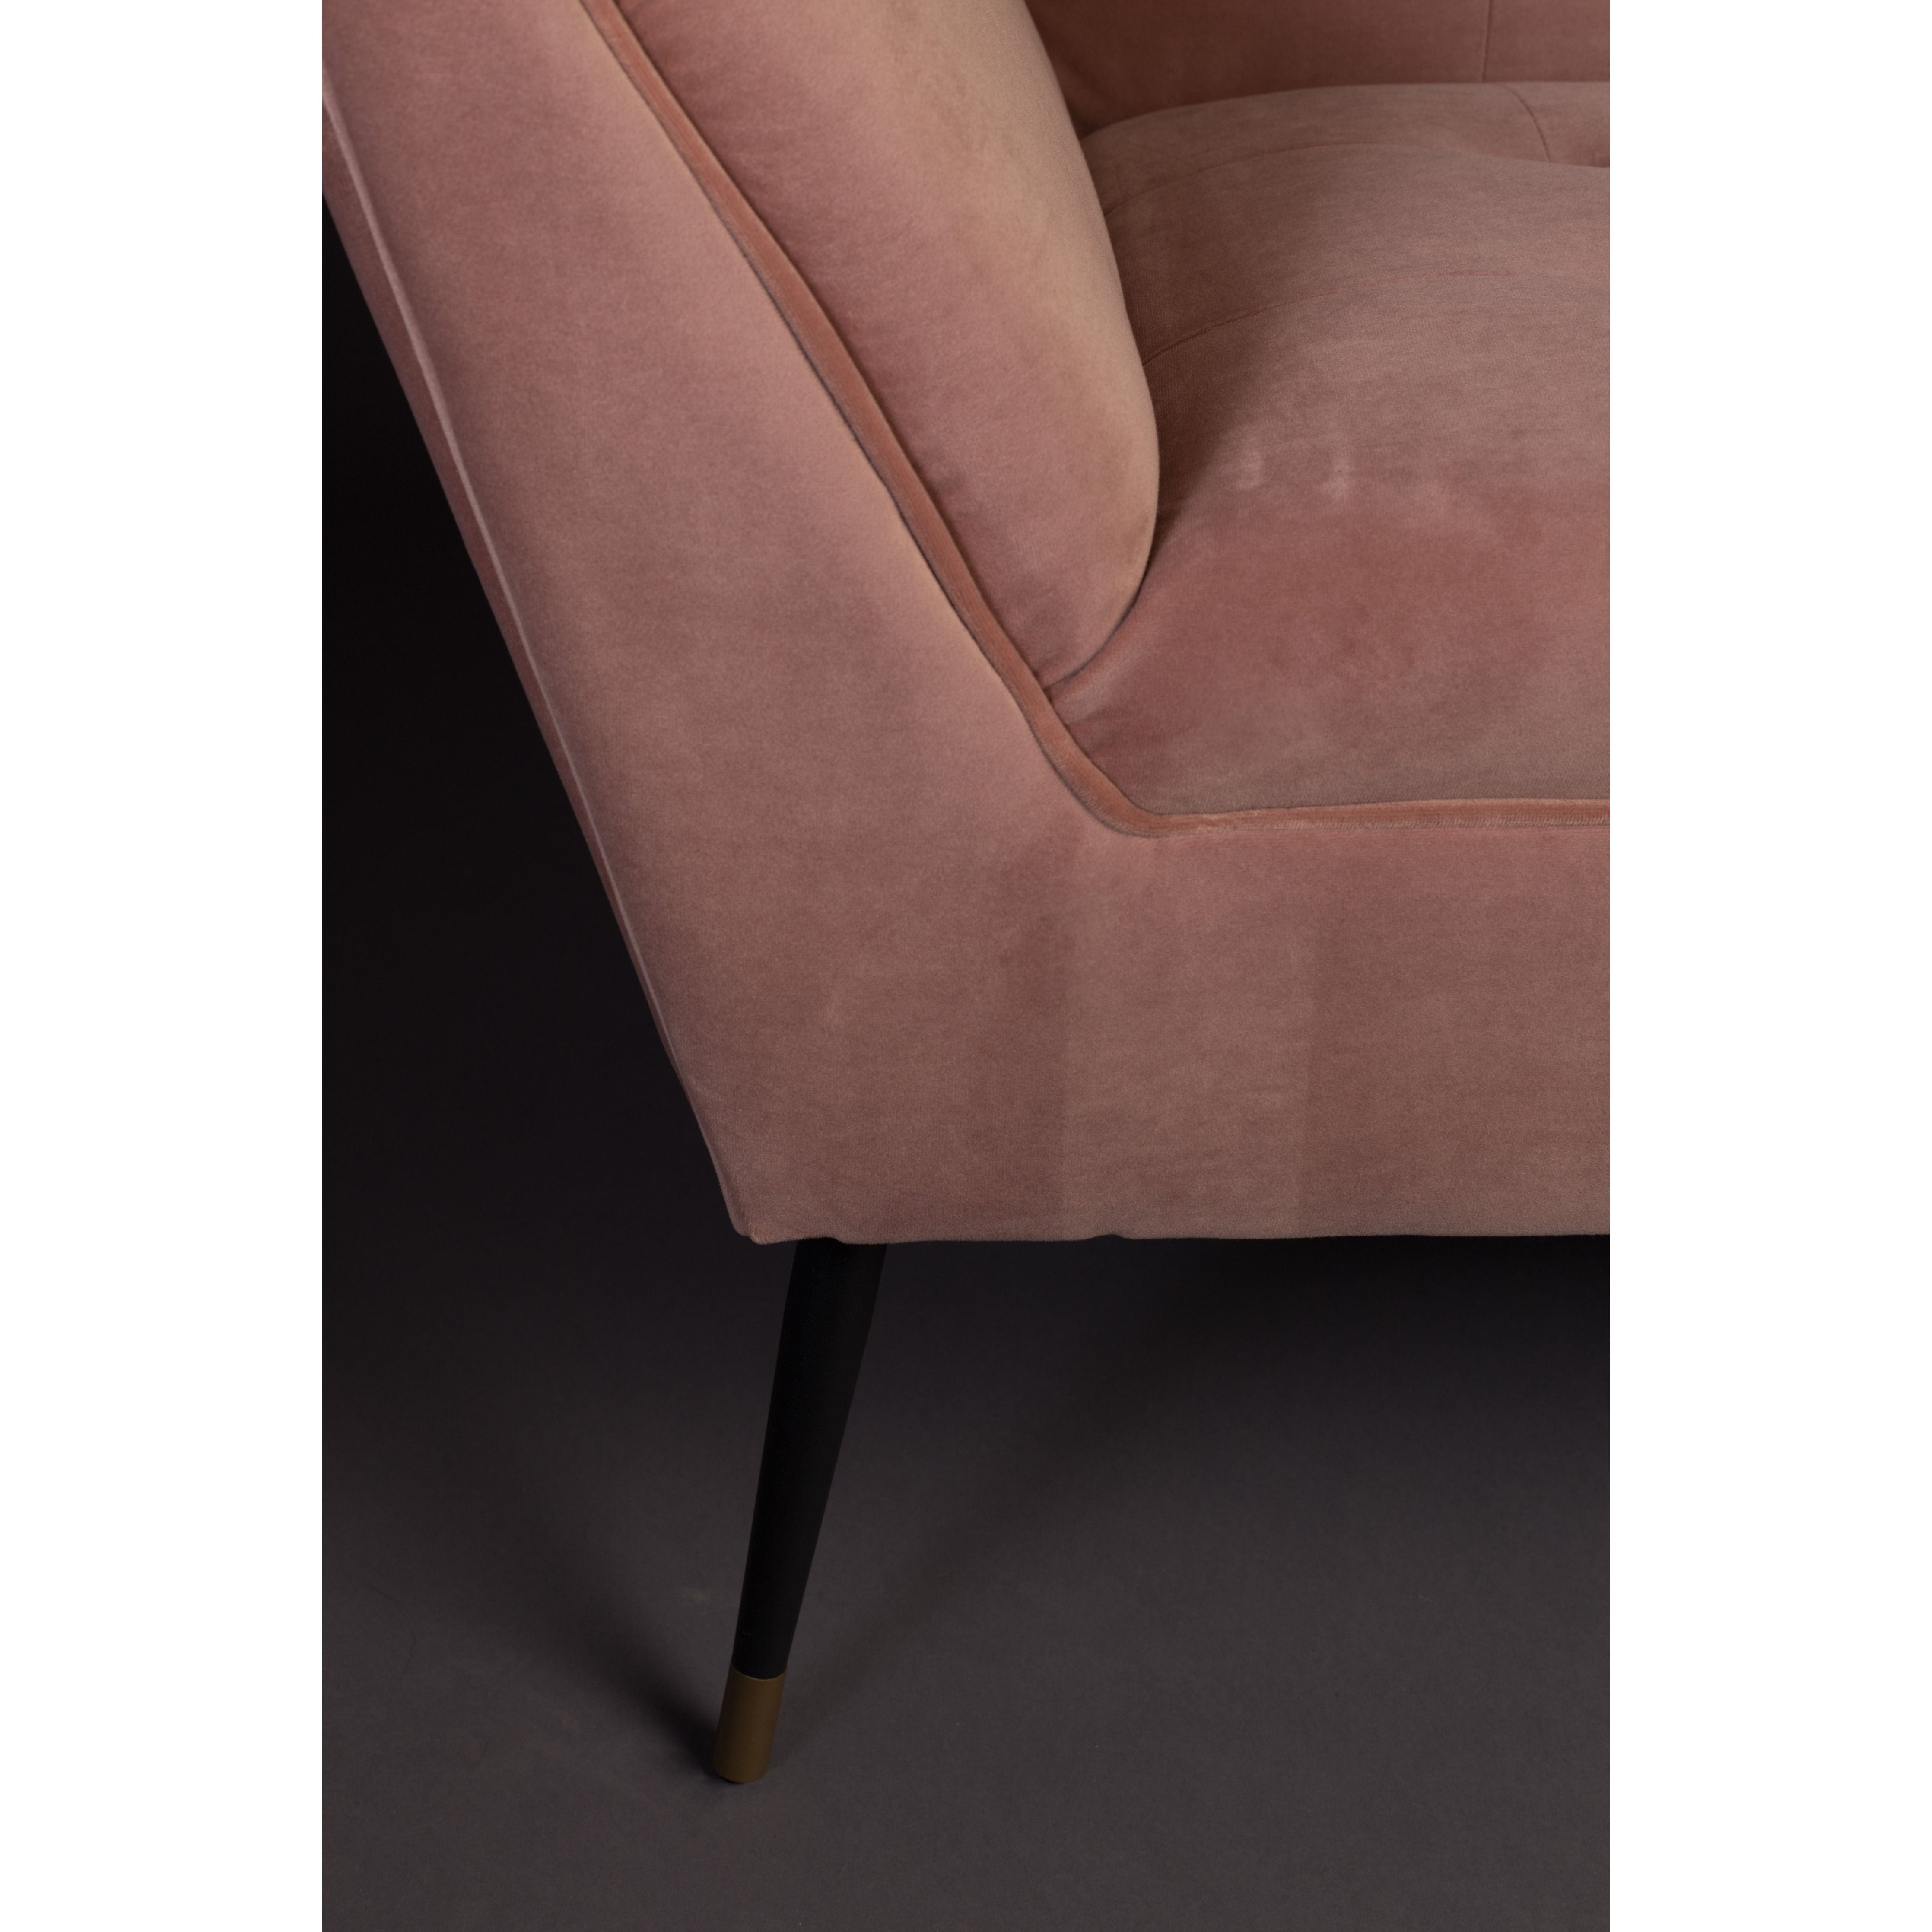 Sofa kate pink clay